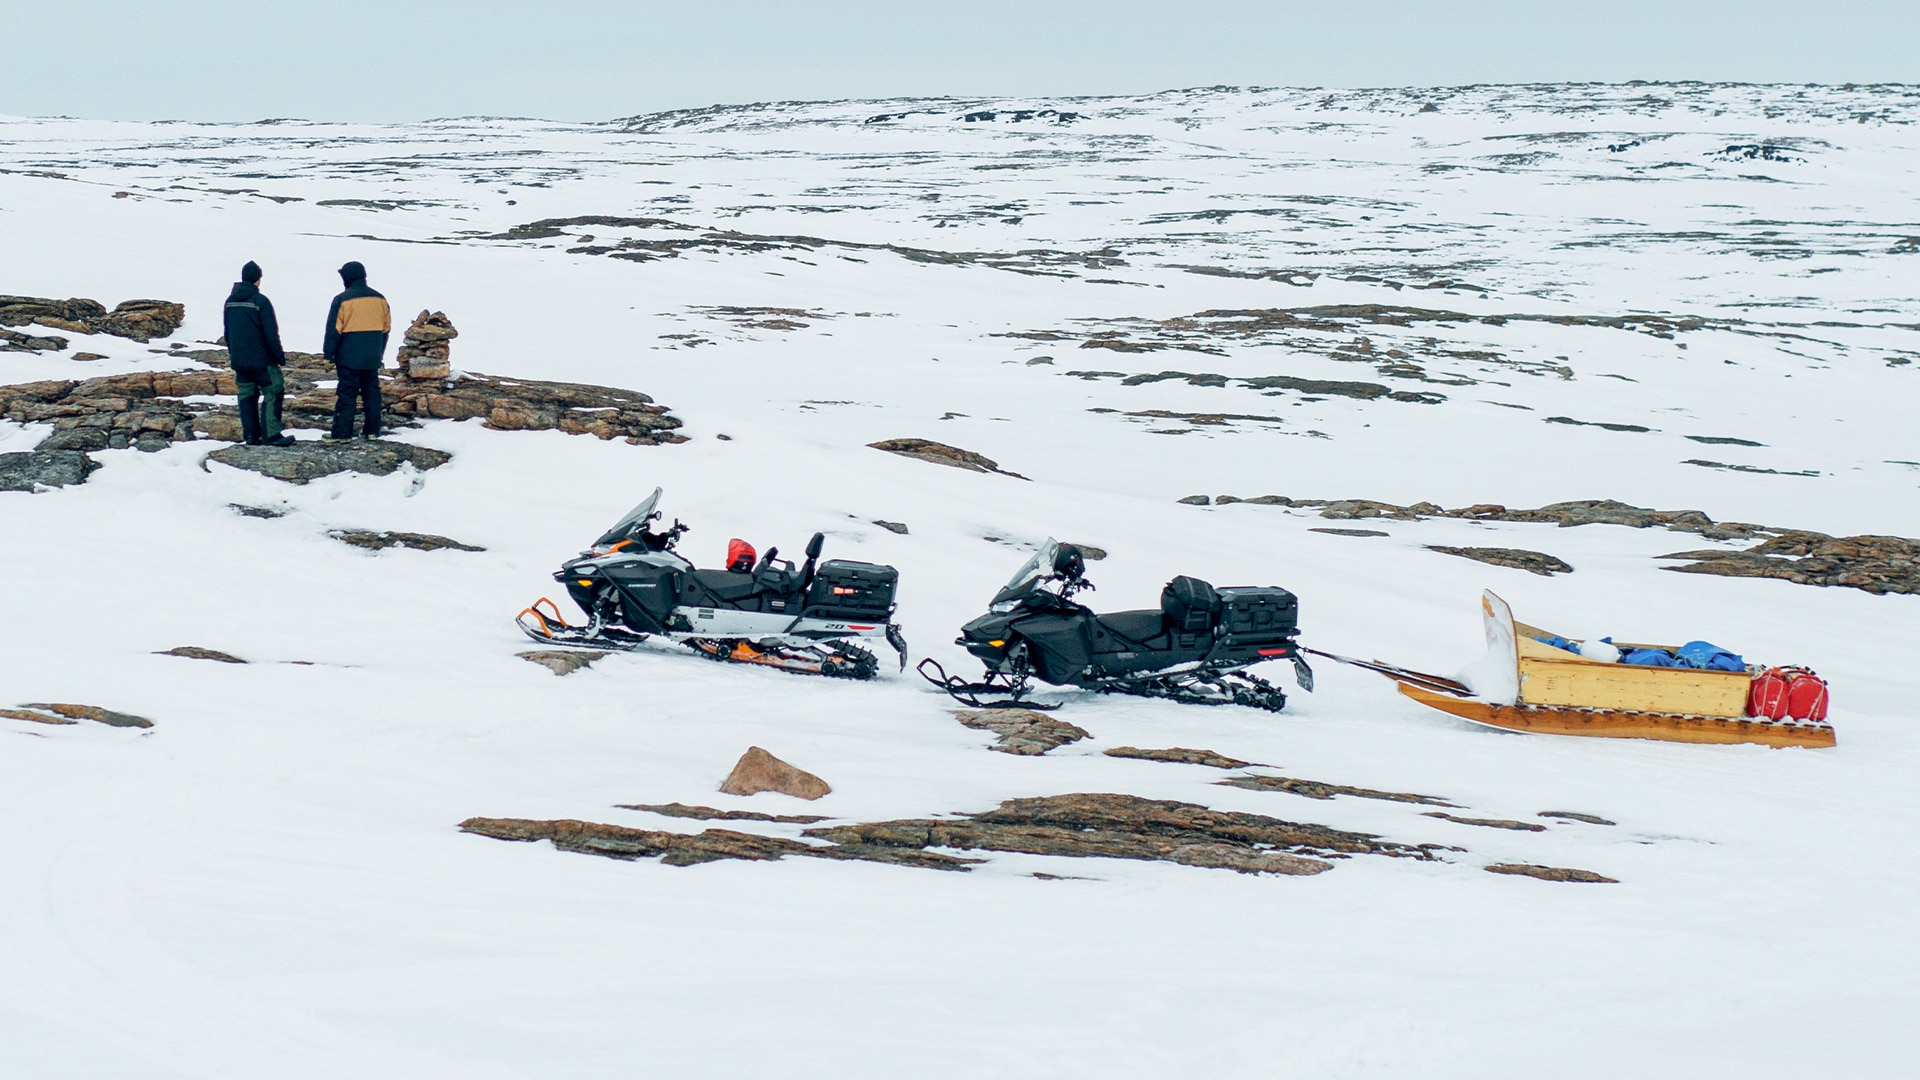 YouTube video - Ski-Doo Rad Rides E4 - Ice Fishing in Nunavut